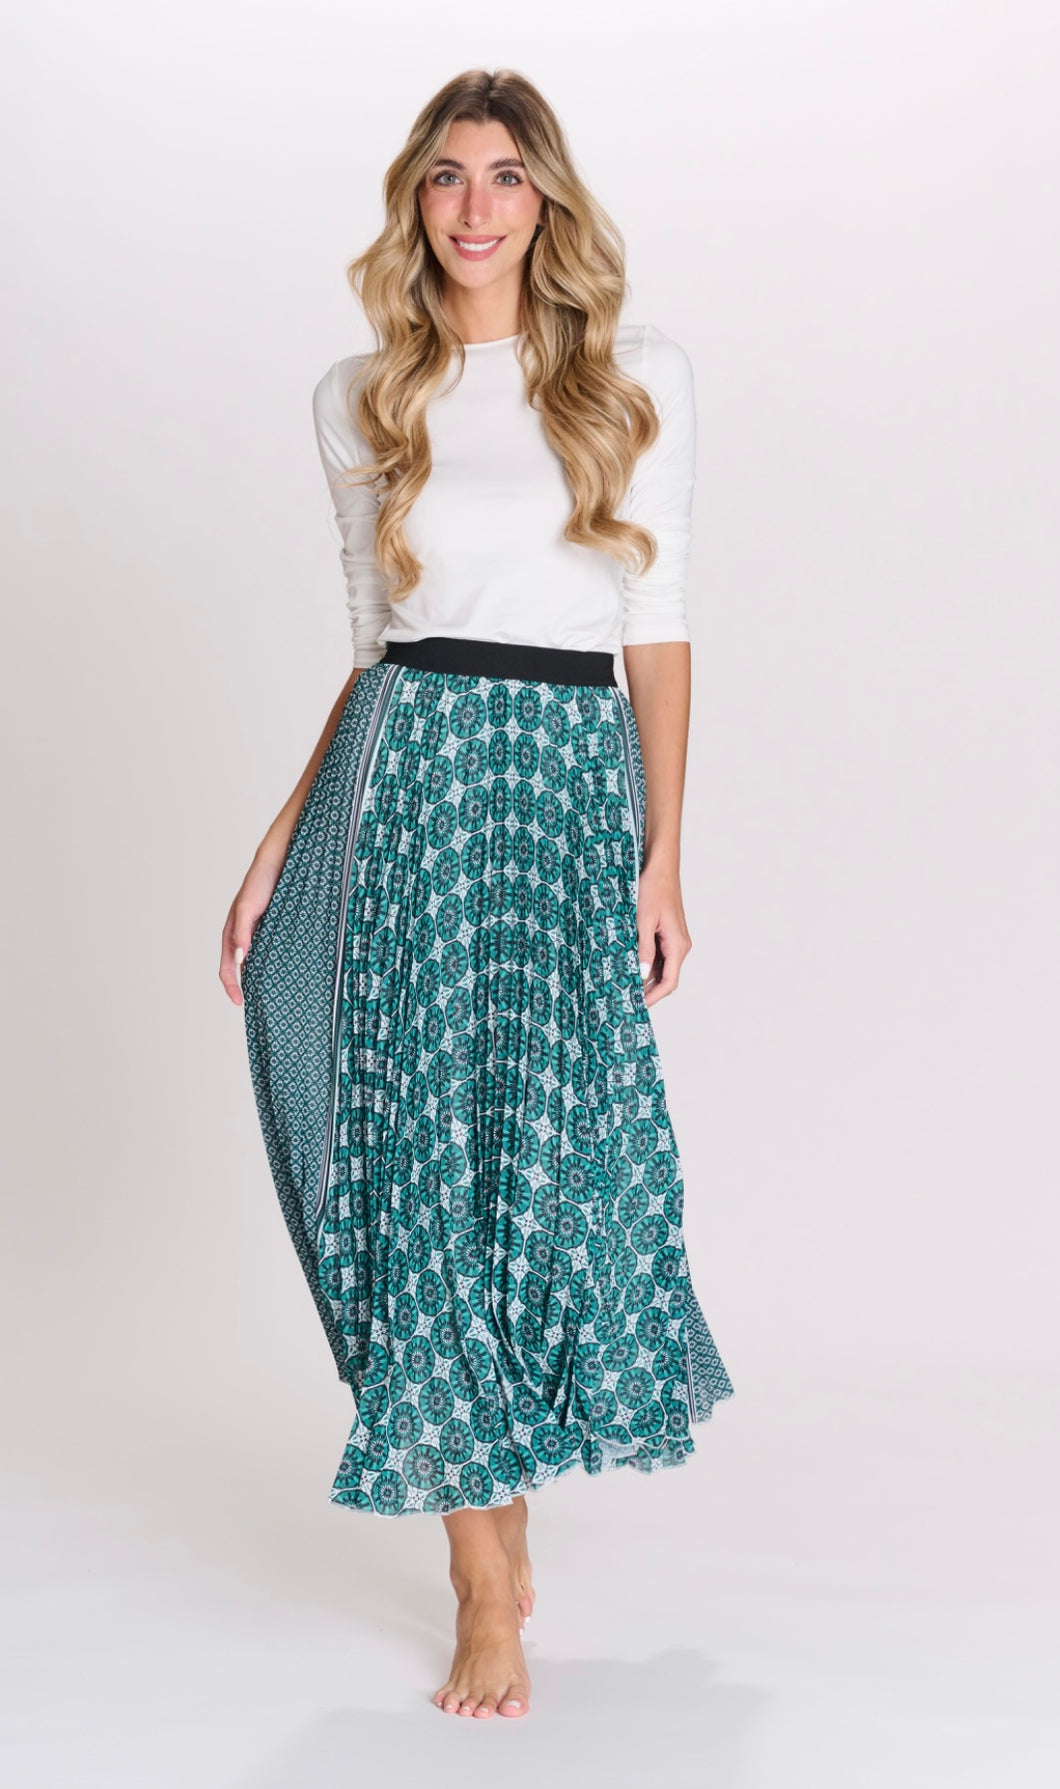 MW Green Printed Pleated Skirt 332327